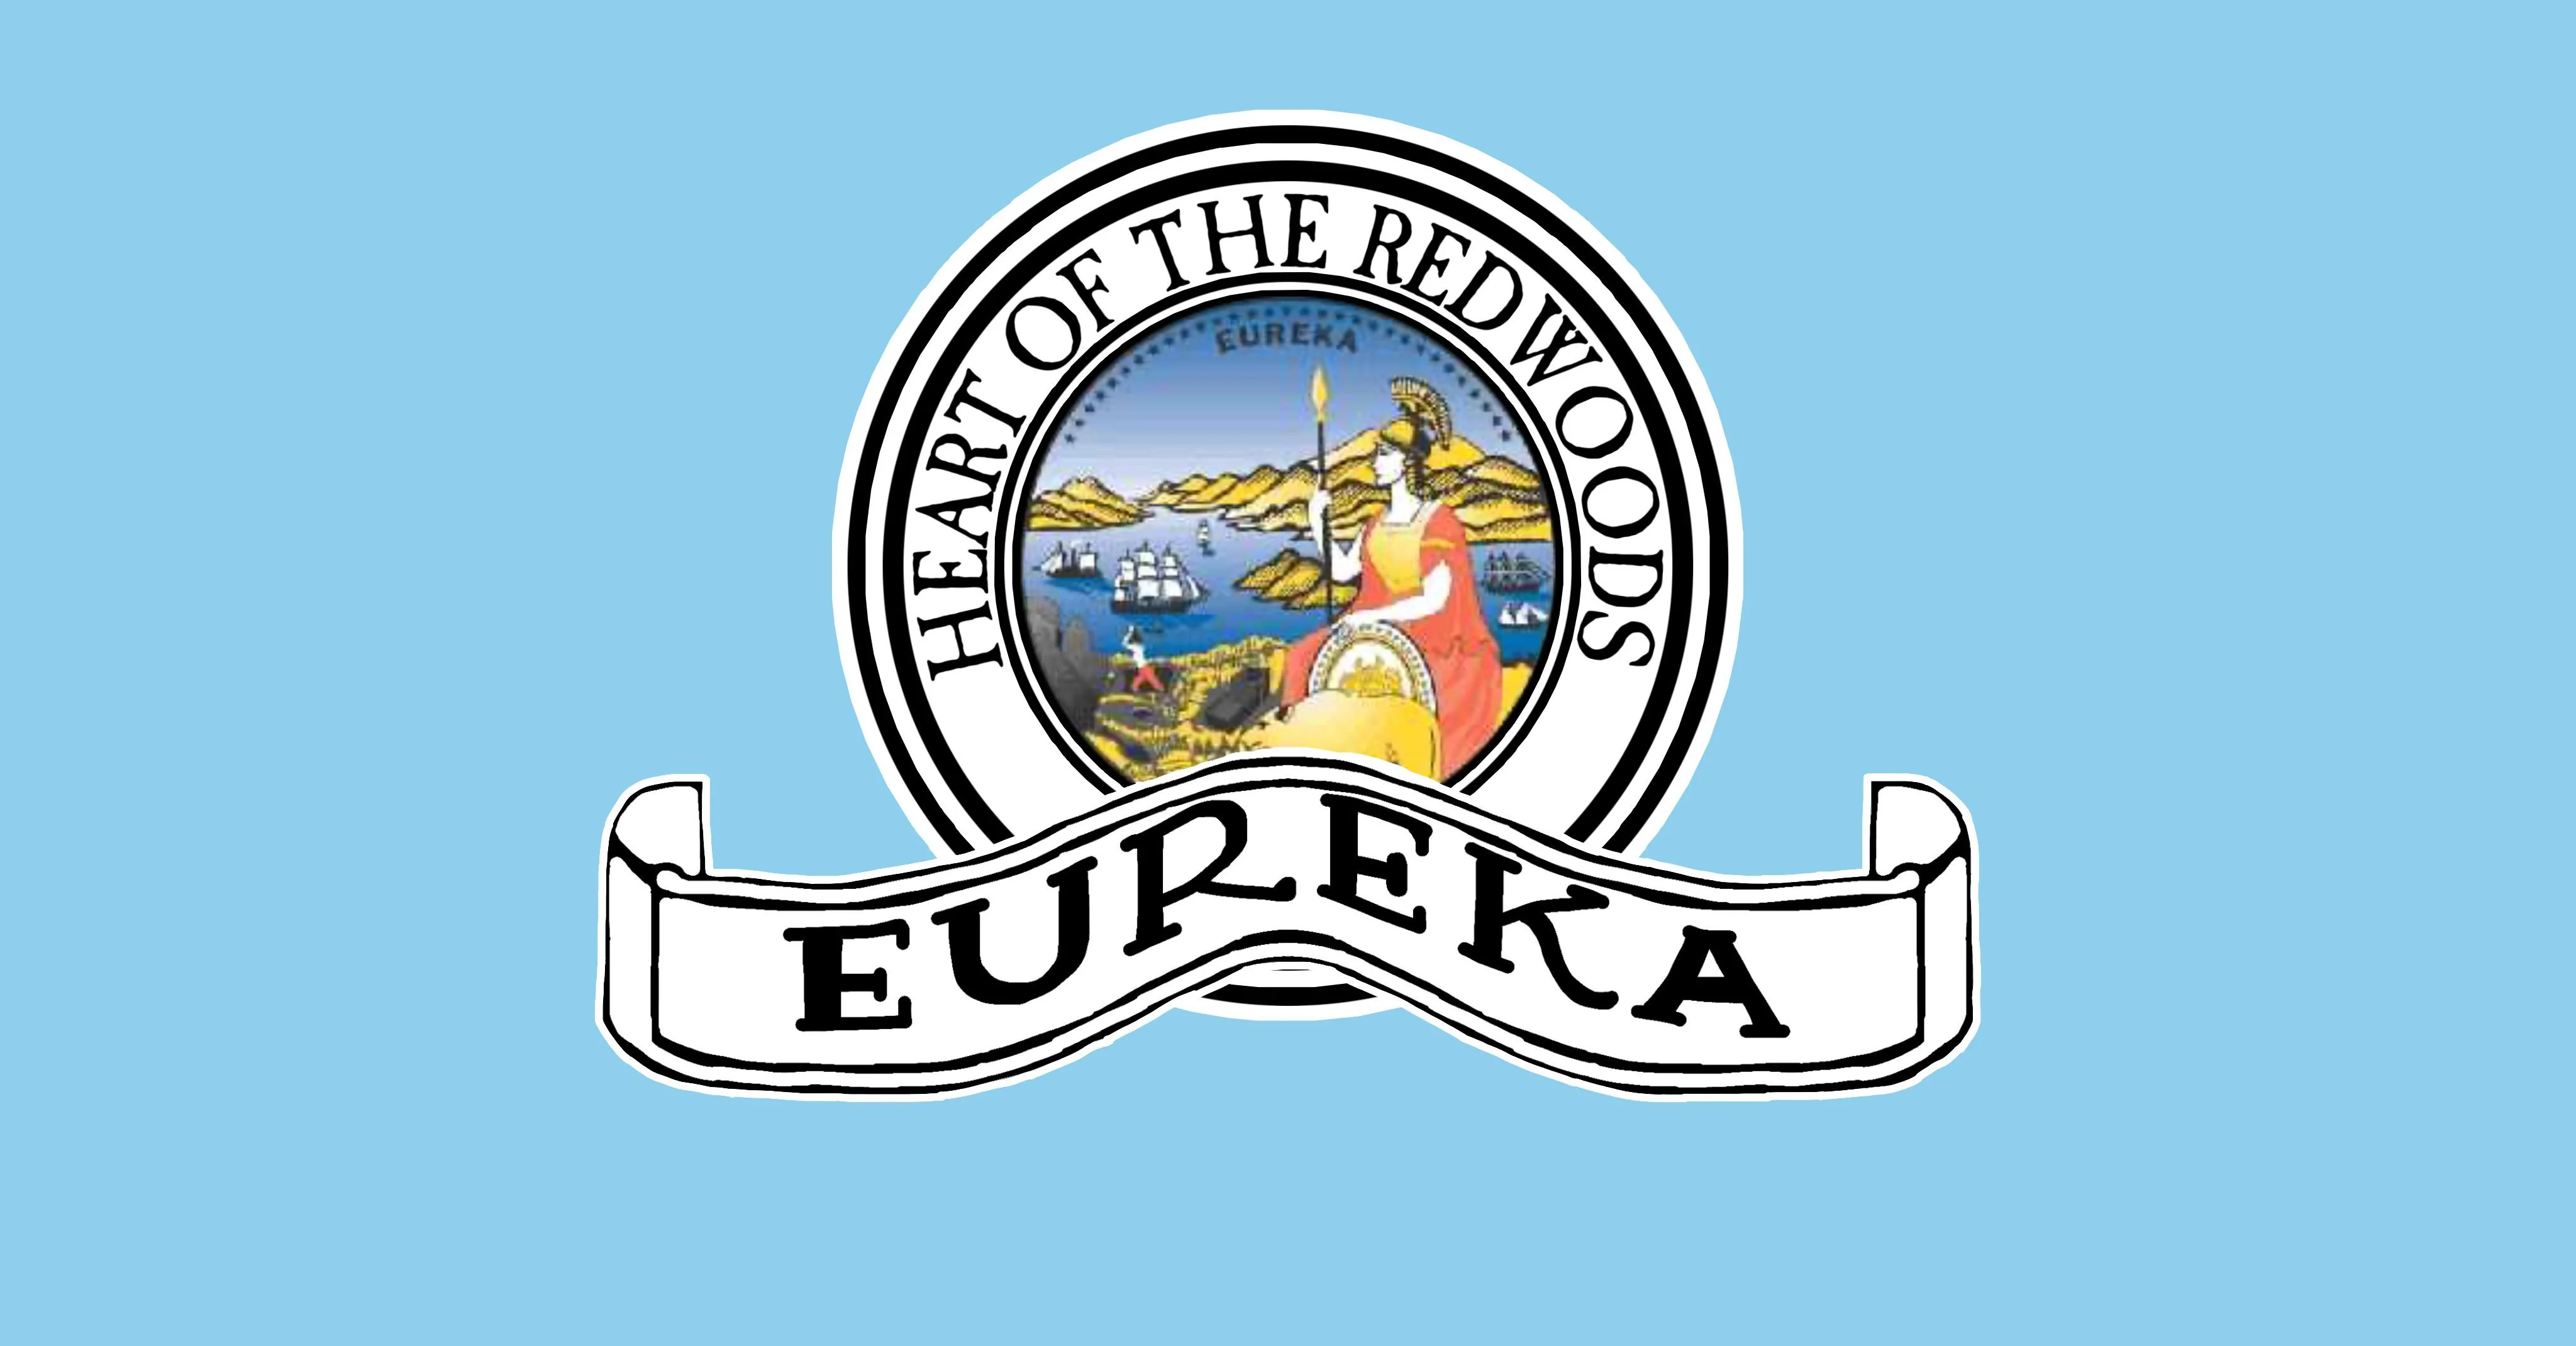 Eureka (word) - Wikipedia